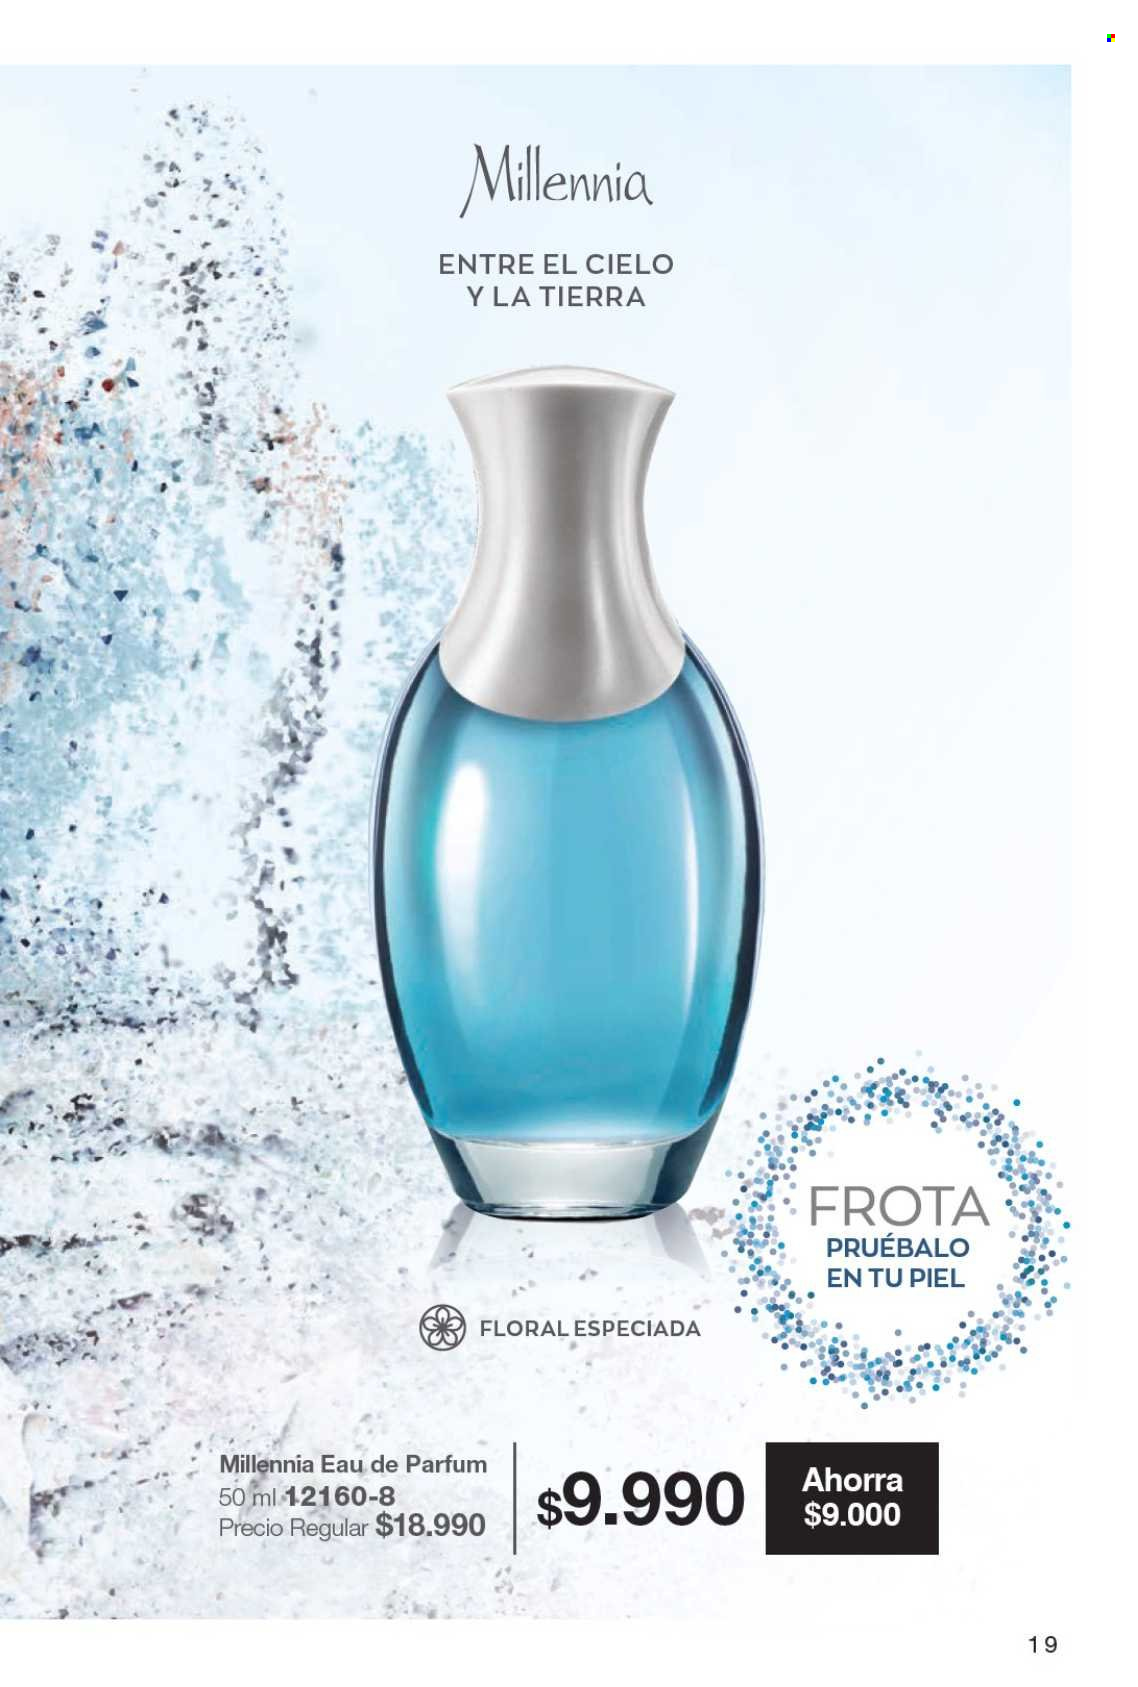 Catálogo Avon - Ventas - perfume. Página 19.